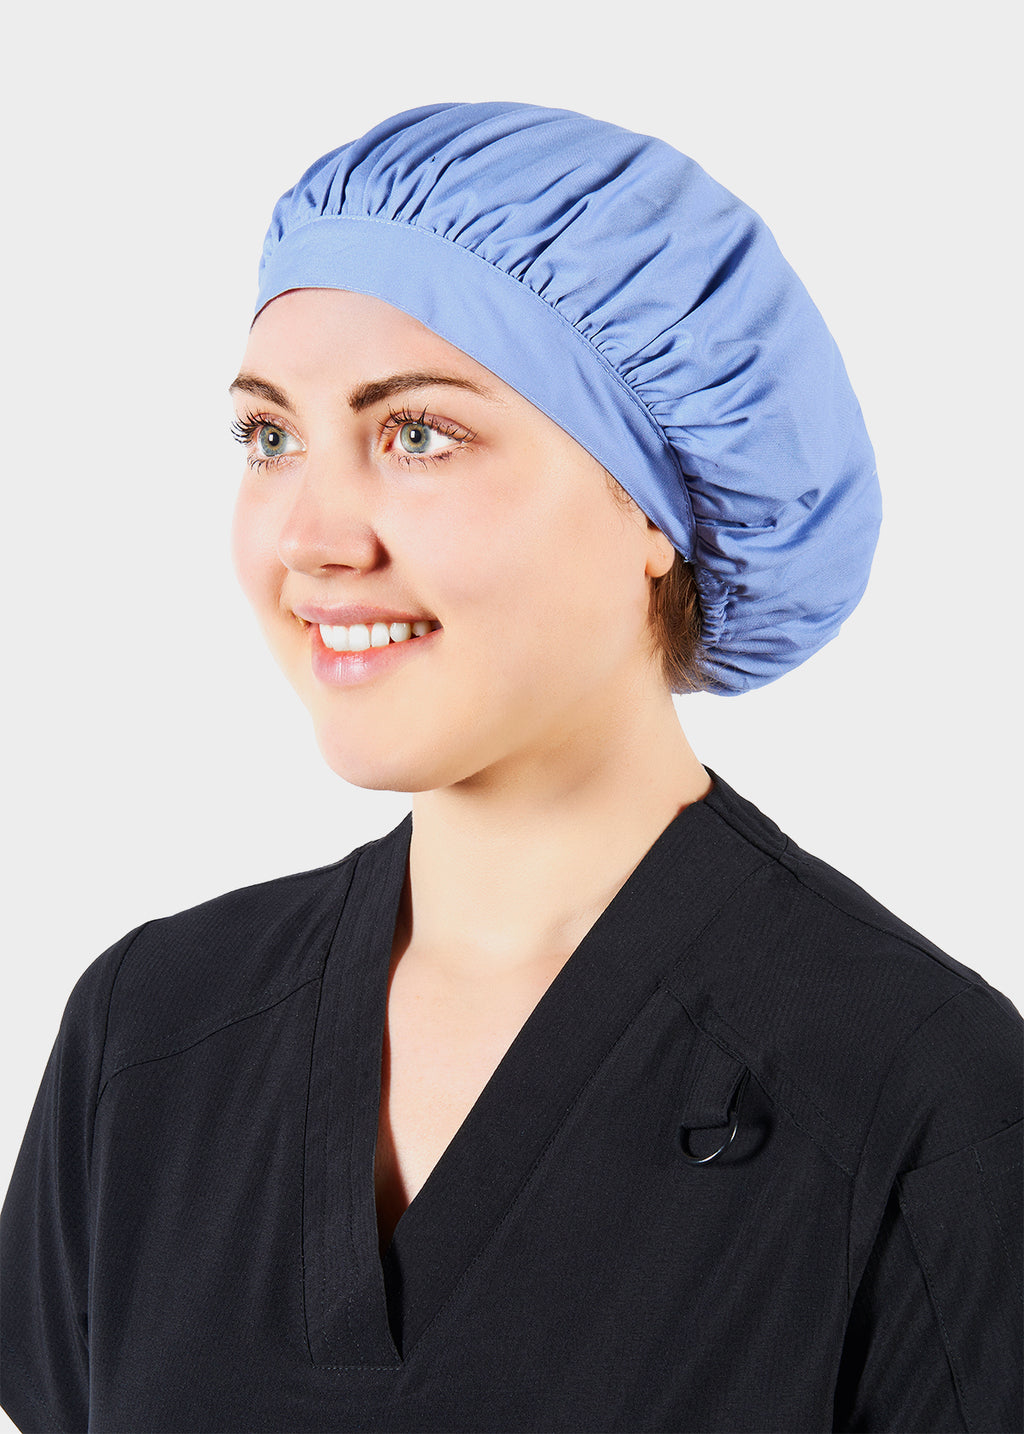 Product - MOBB Buffant Surgeon's Cap